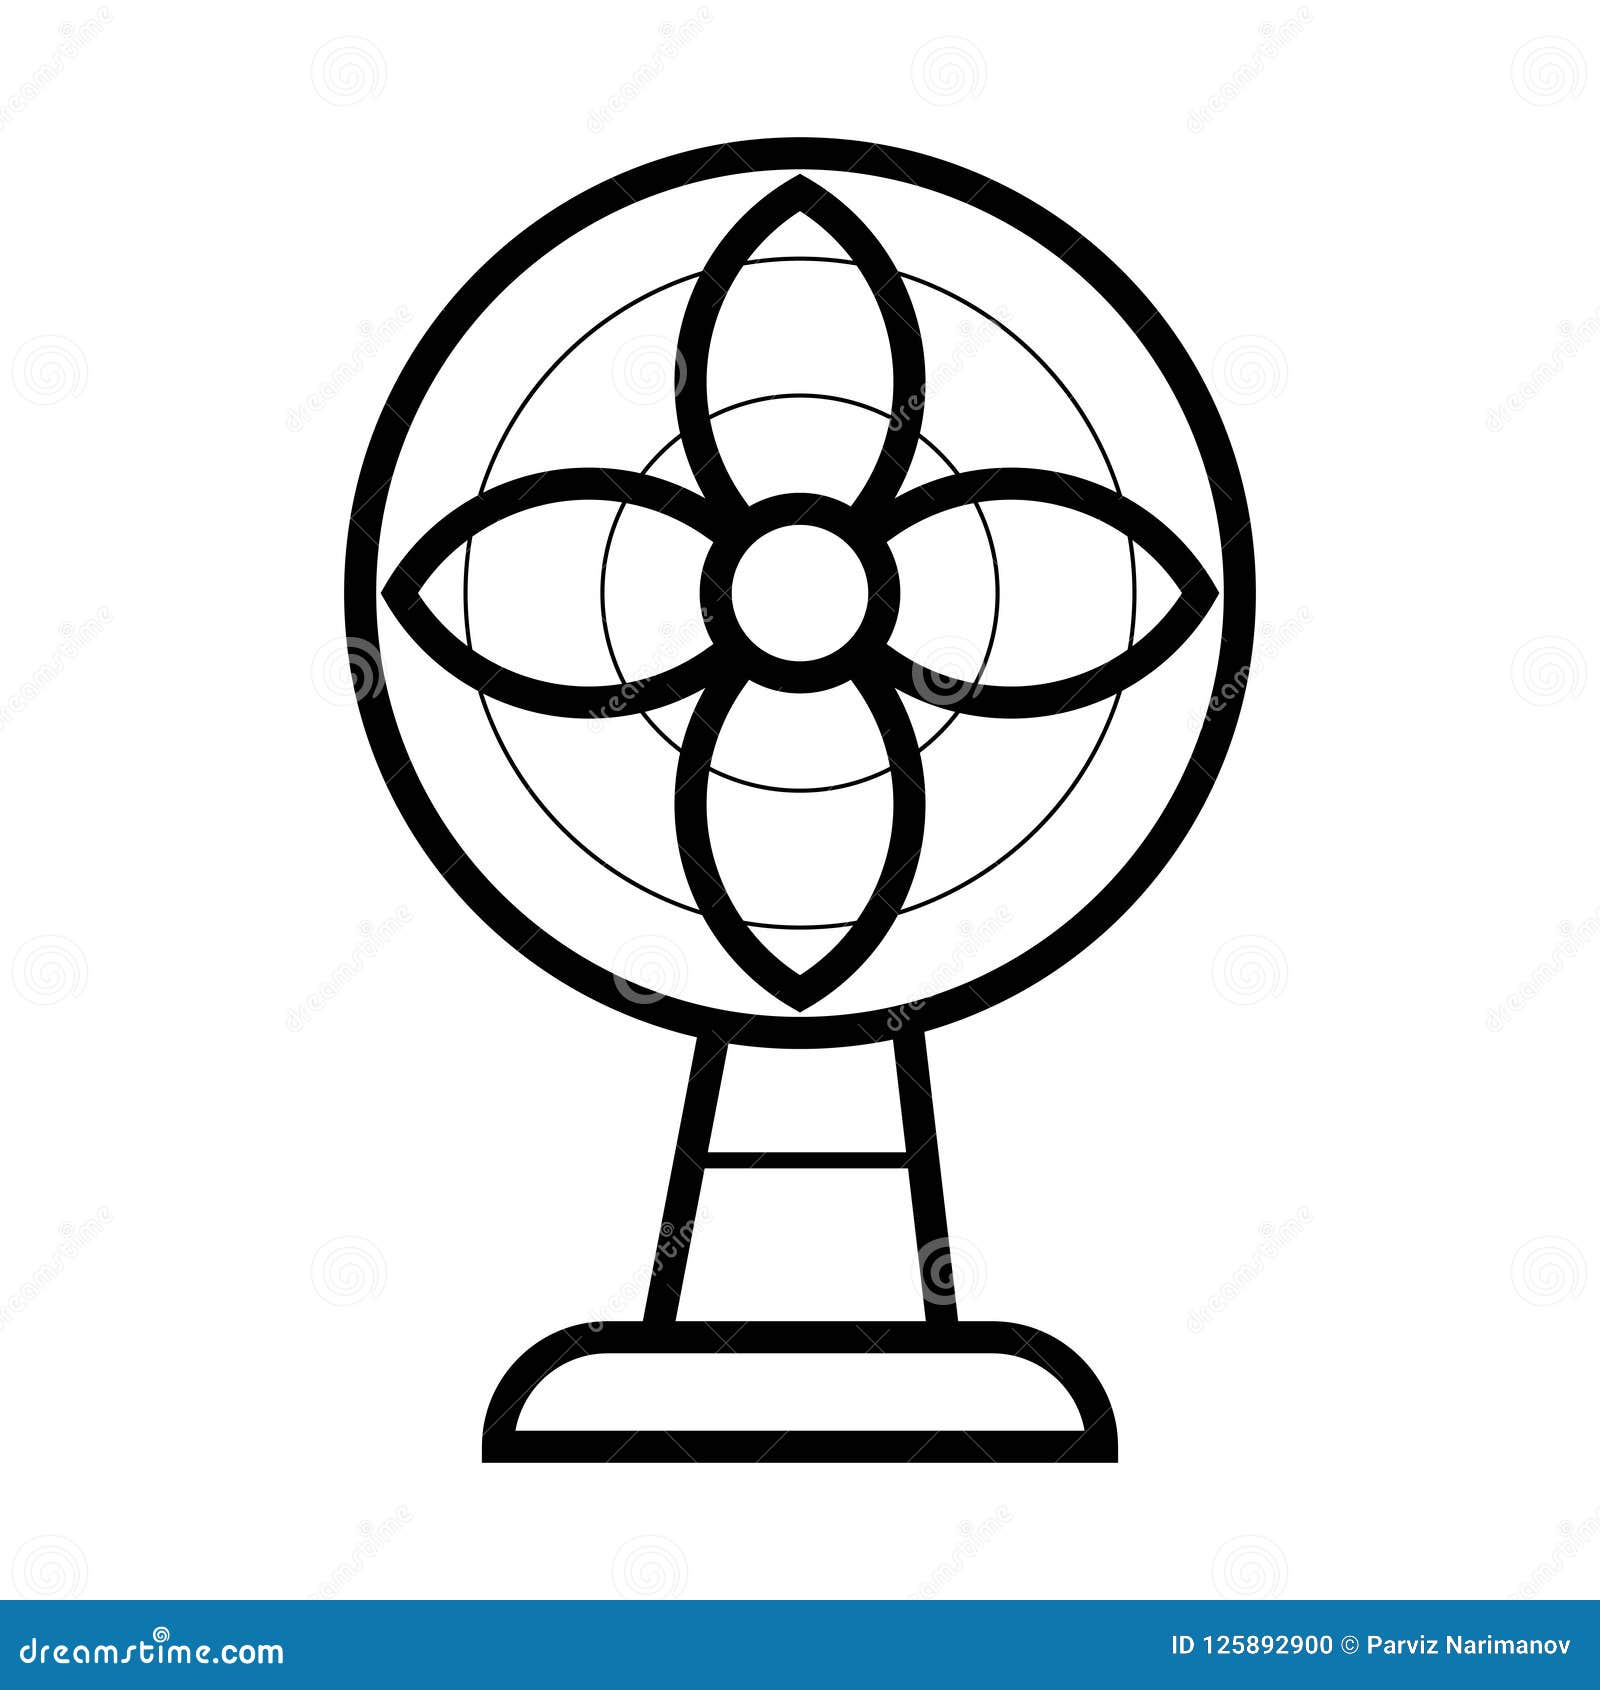 Ventilatorikone Entwurfsillustration der Ventilatorvektorikone. Ventilatorikone Umreißen Sie Illustration der Ventilatorvektorikone für Netz